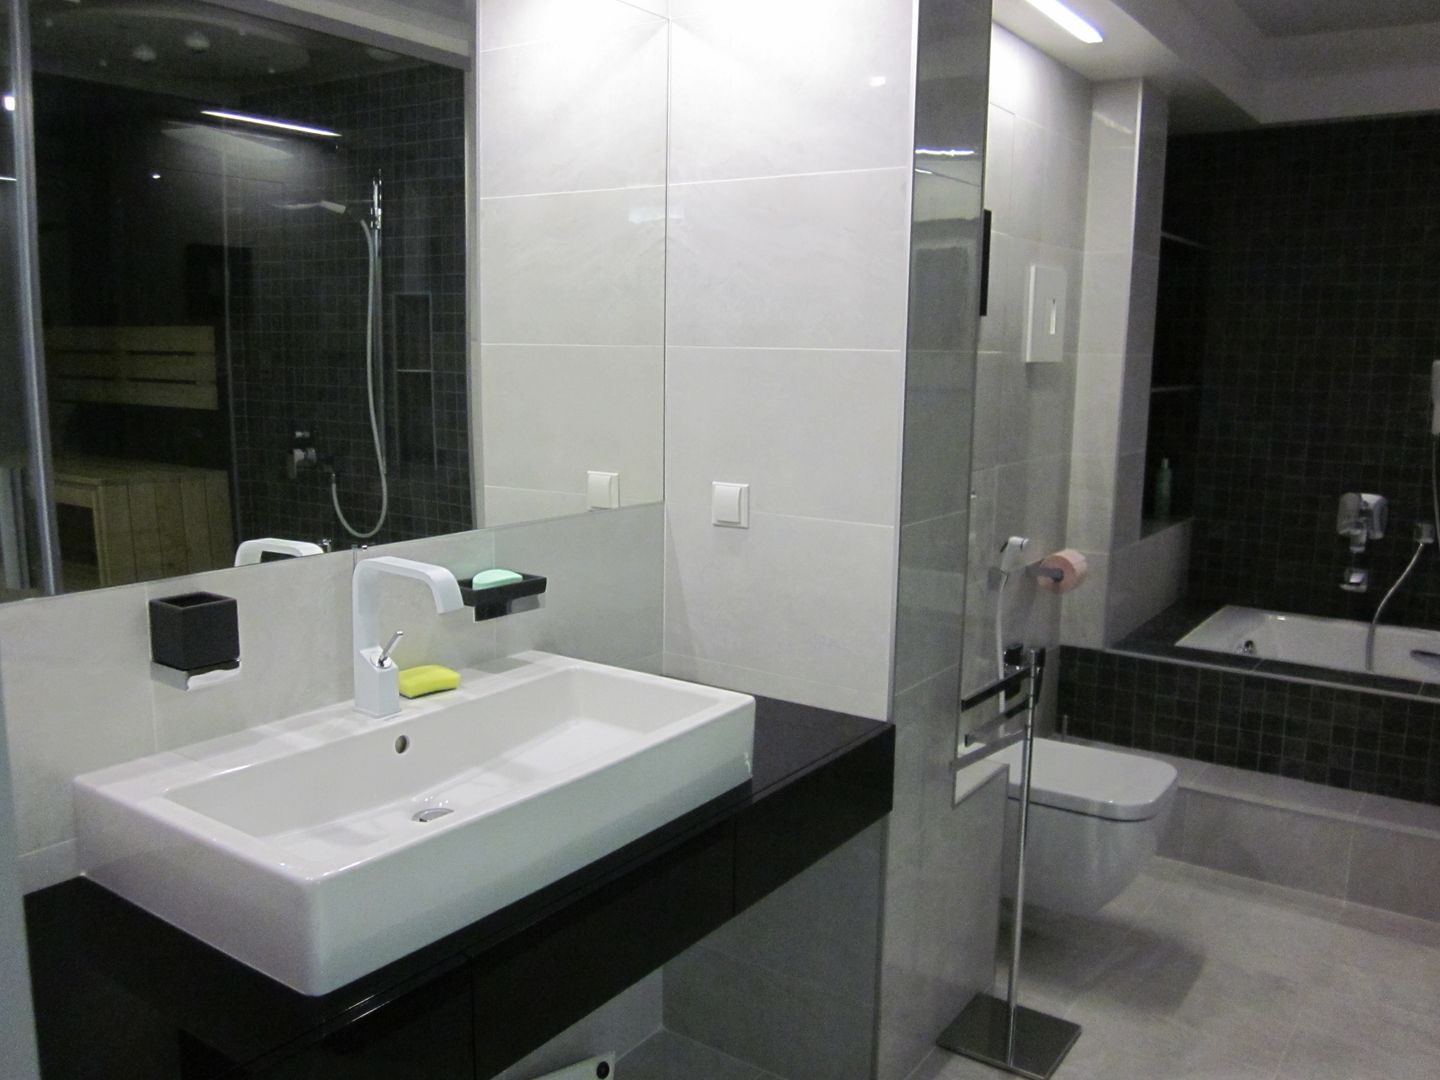 "контемпорари" в интерьере , ann-ulya ann-ulya Ванная комната в стиле минимализм